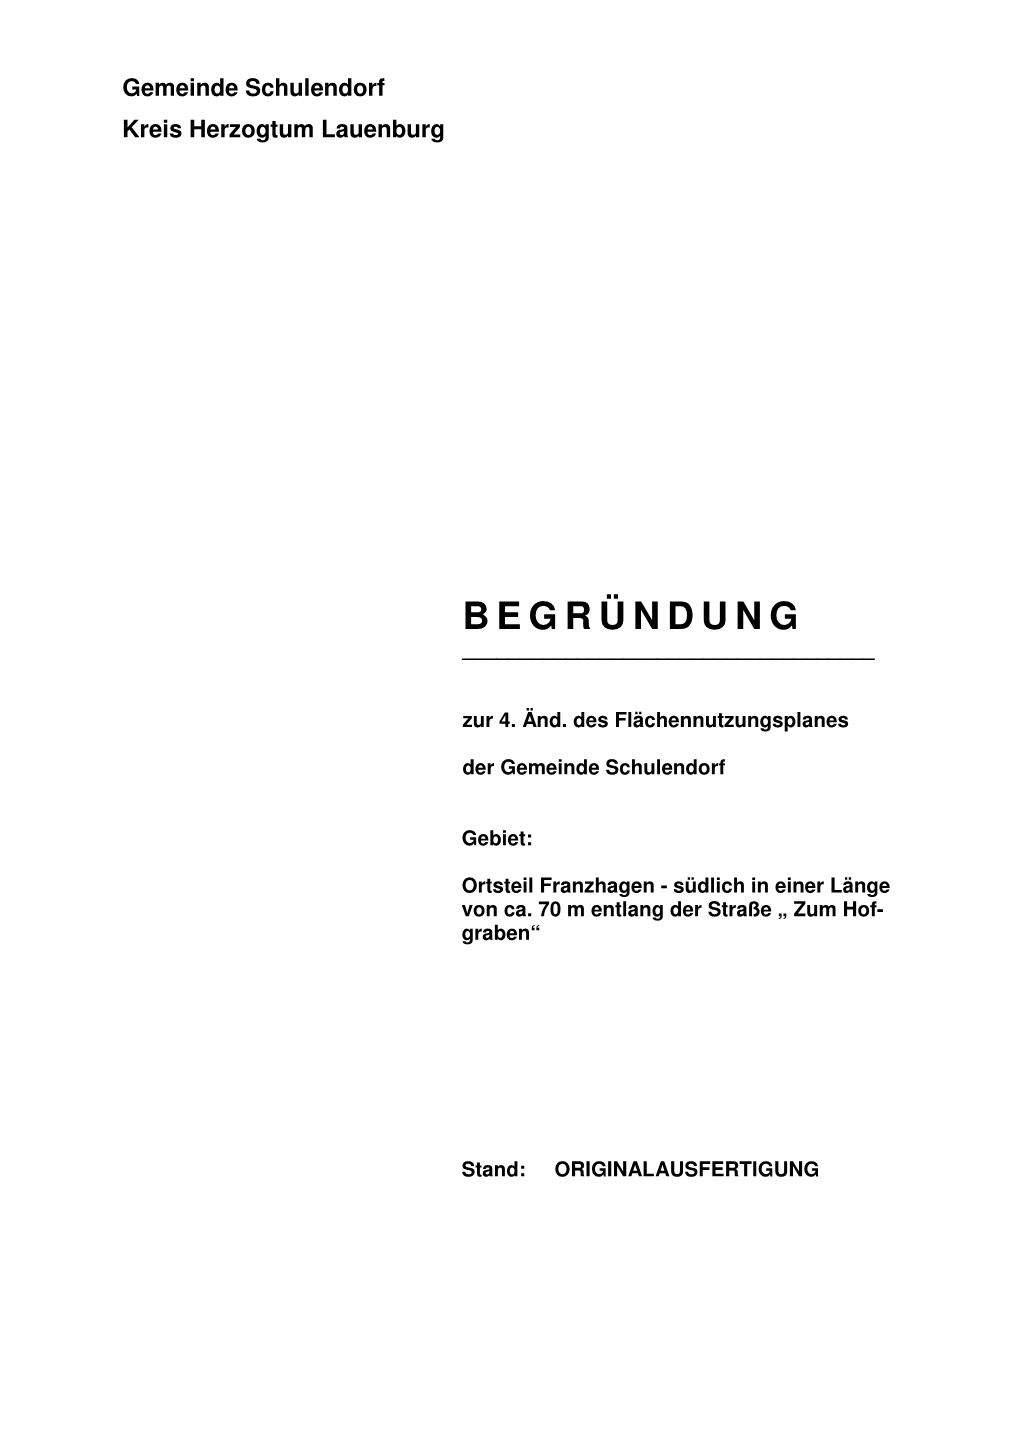 4Ä..F-Plan Schulendorf Originalbegründung